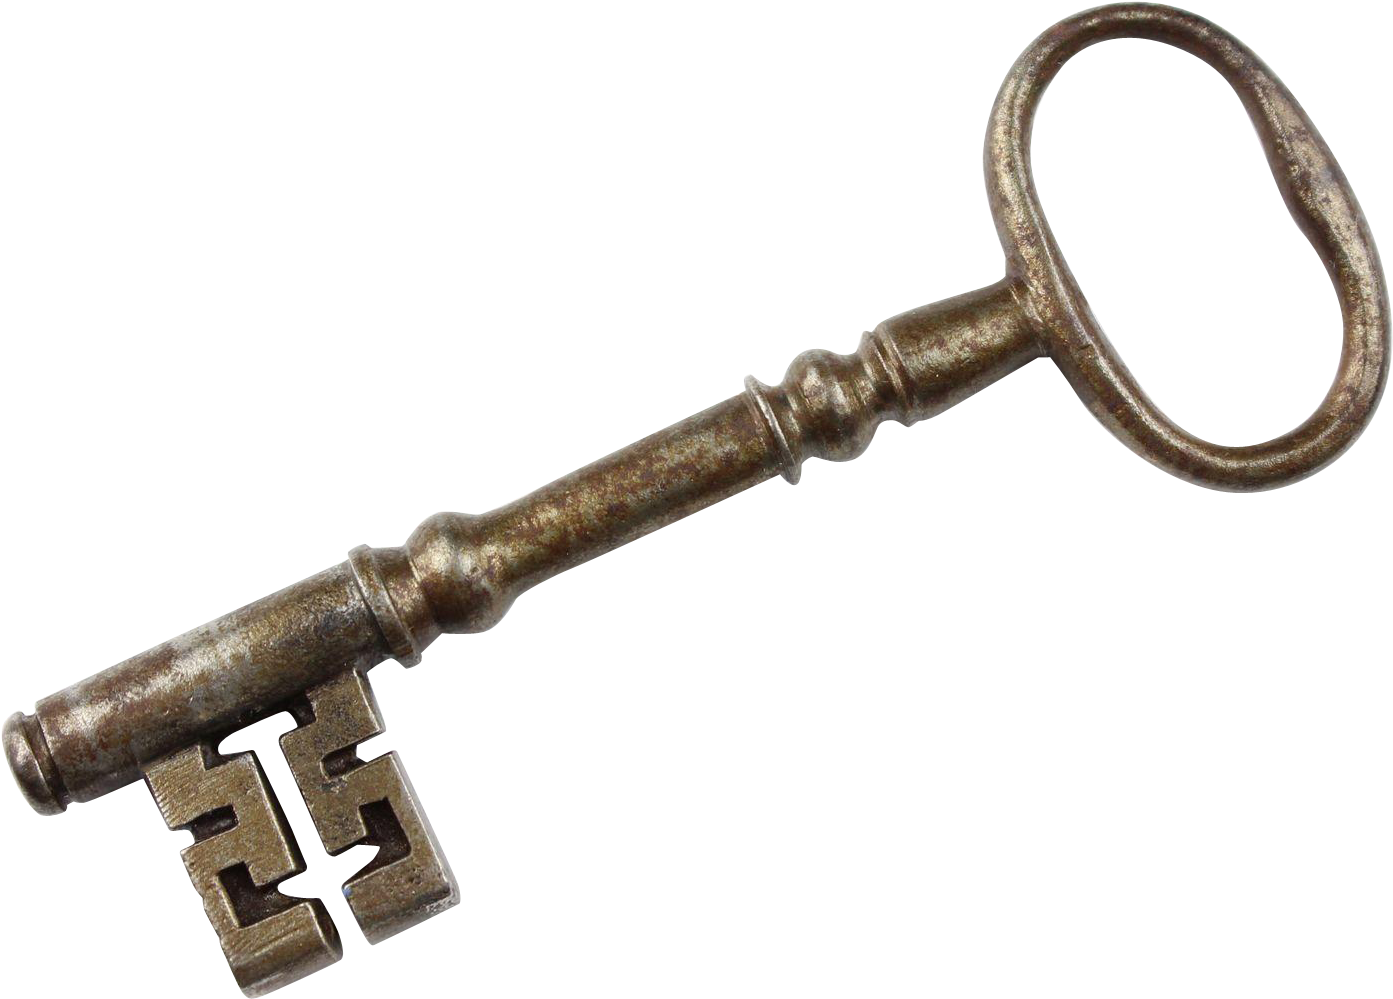 Vintage Skeleton Key For Kids - Ruby Lane (1392x1392)